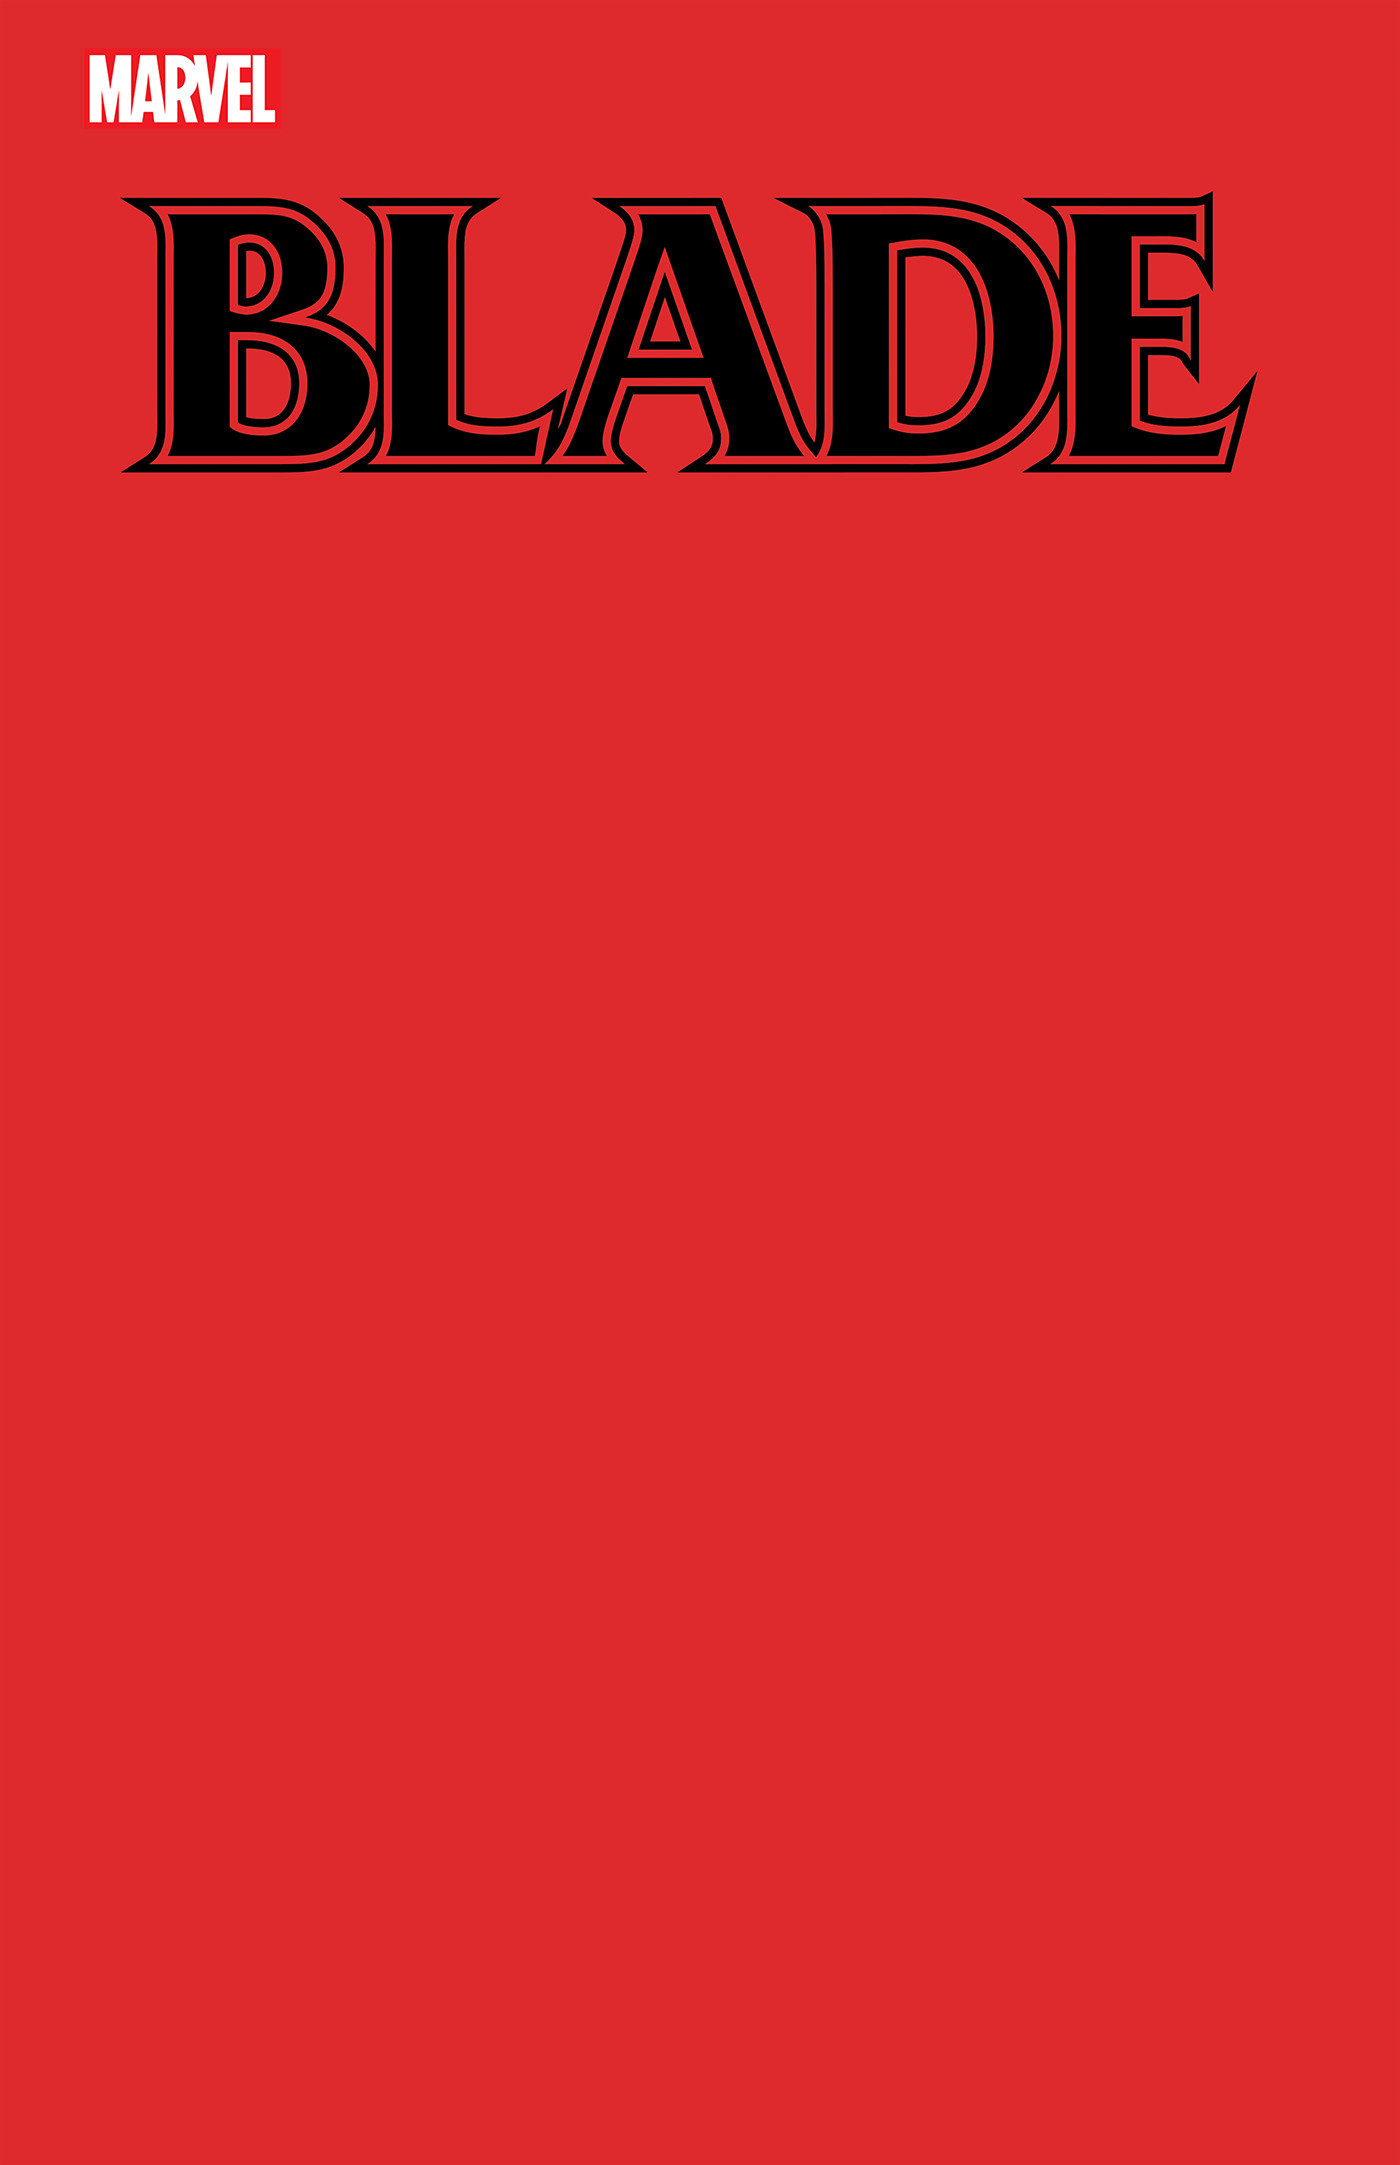 blade movie logo